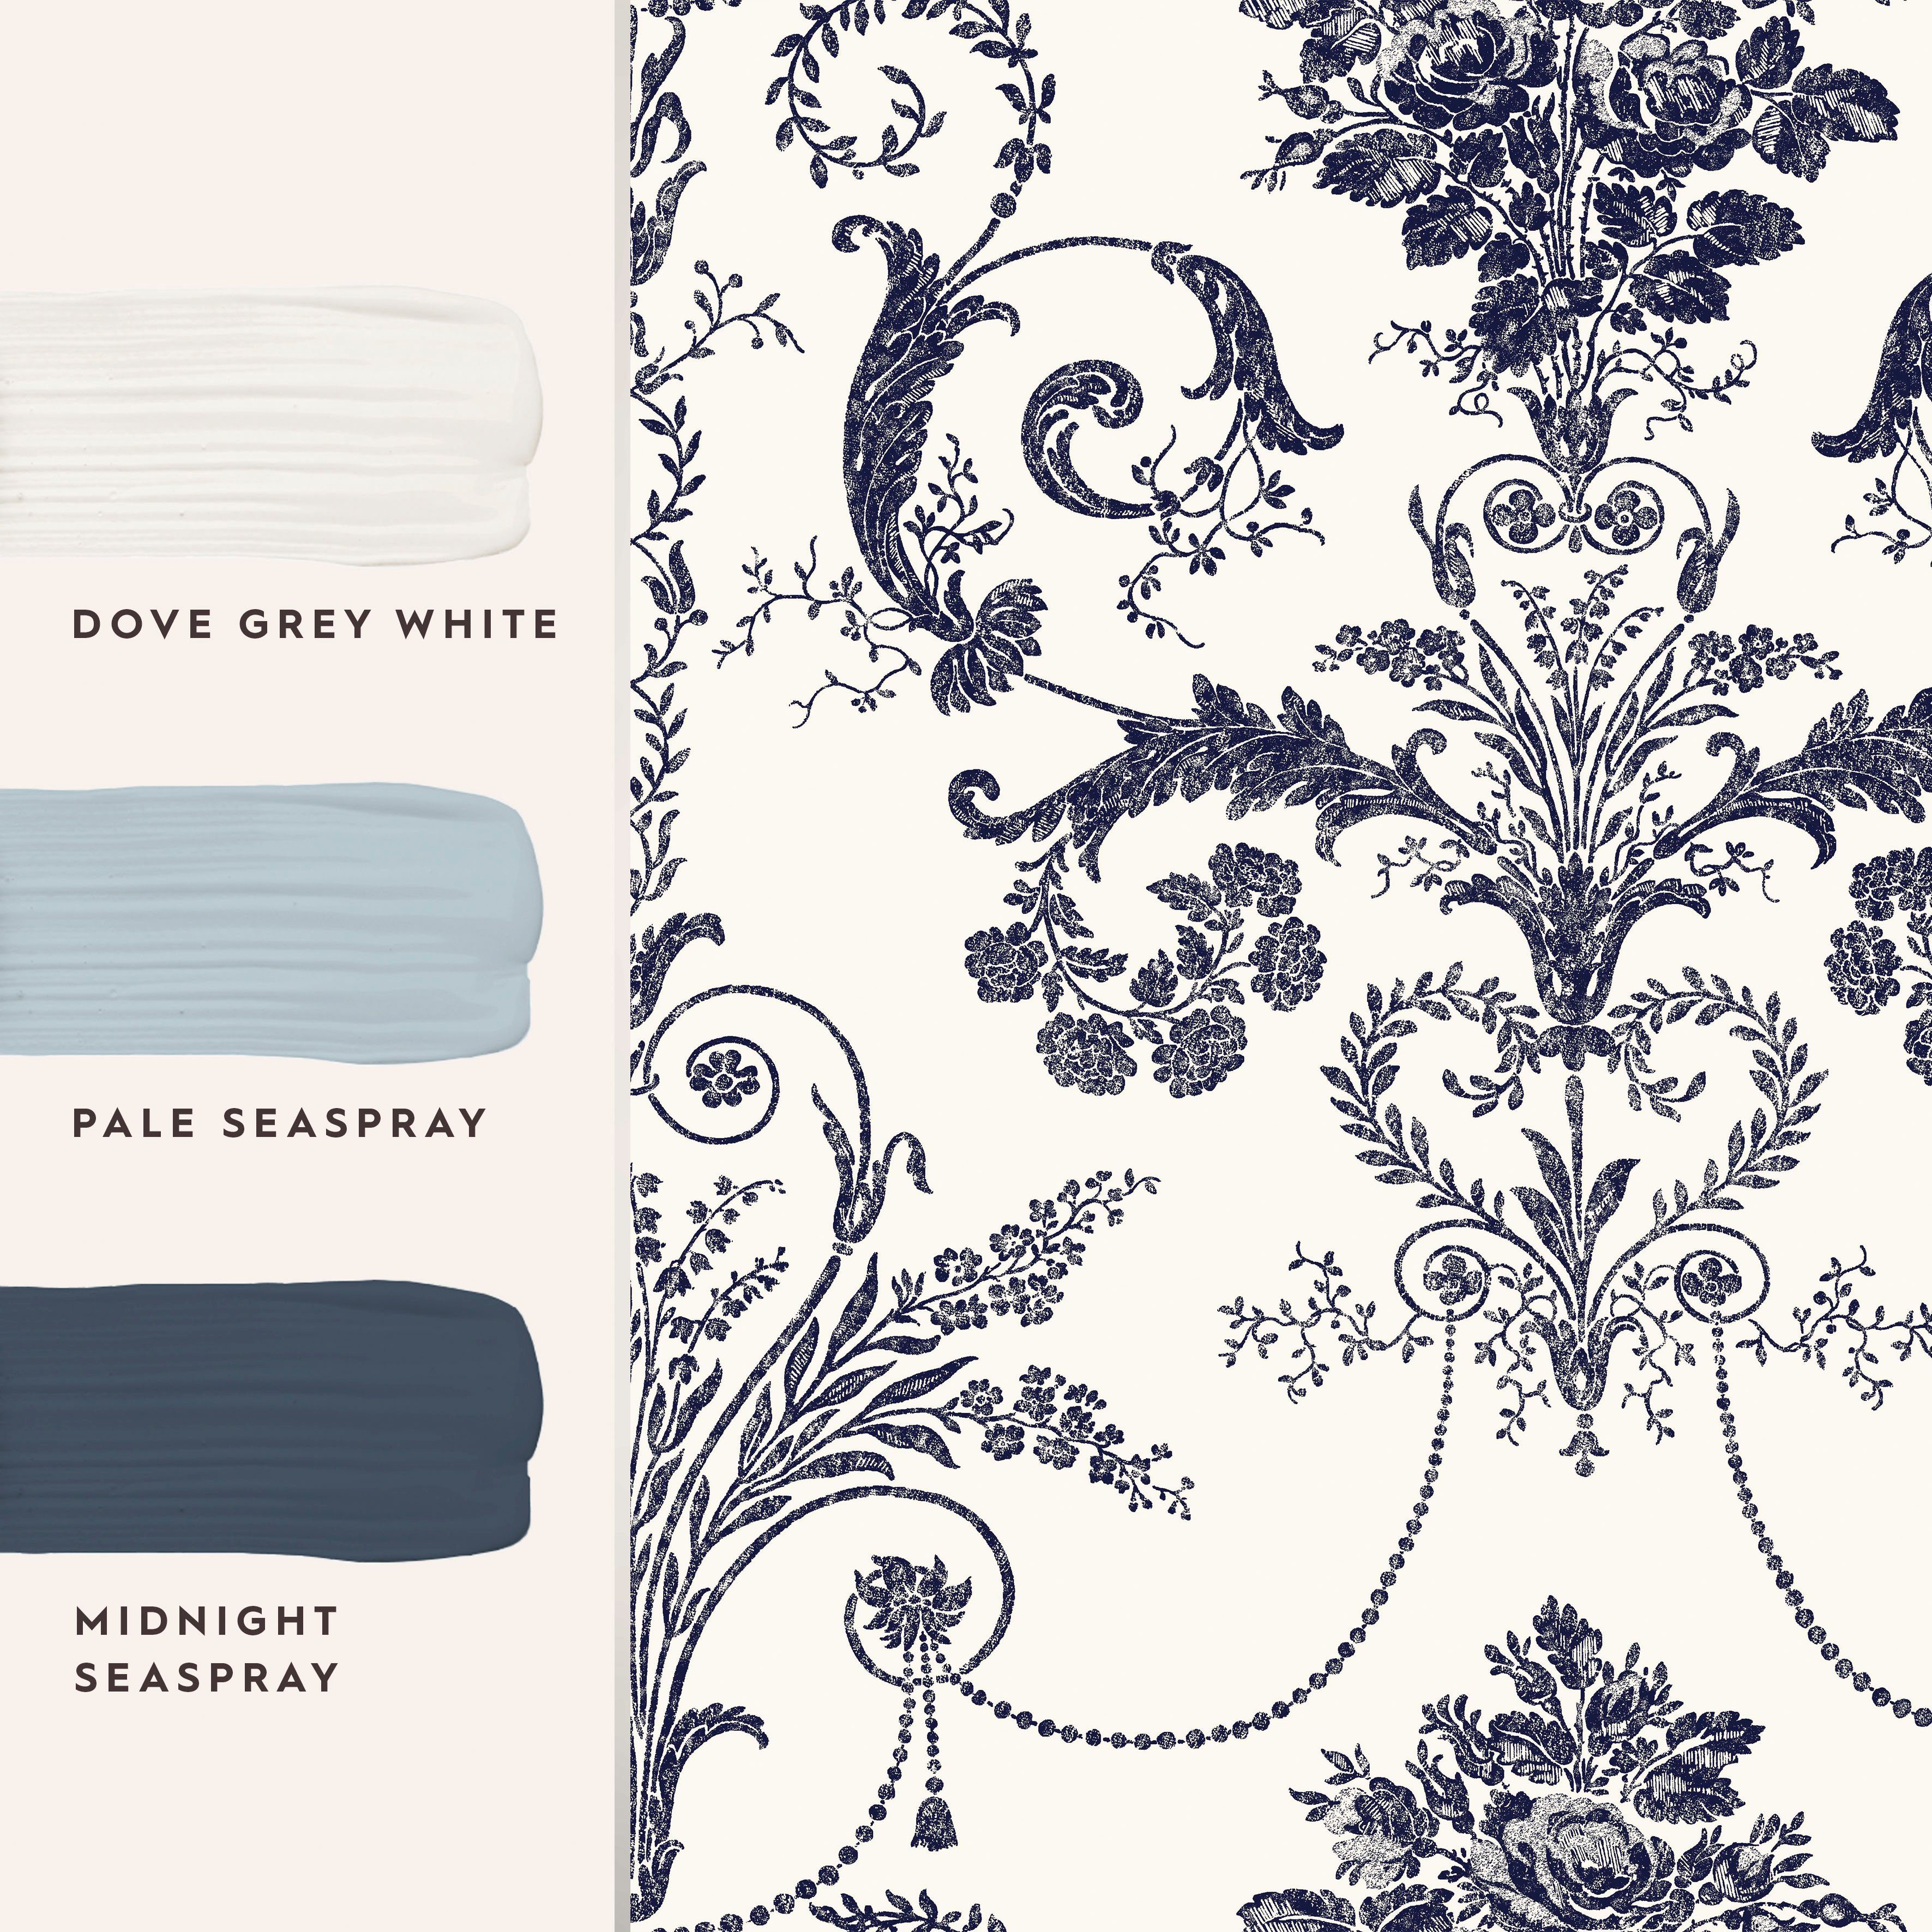 White LAURA Grey MATT Paint Dove Quality grey Fine EMULSION matt, Wandfarbe ASHLEY shades, L 2,5